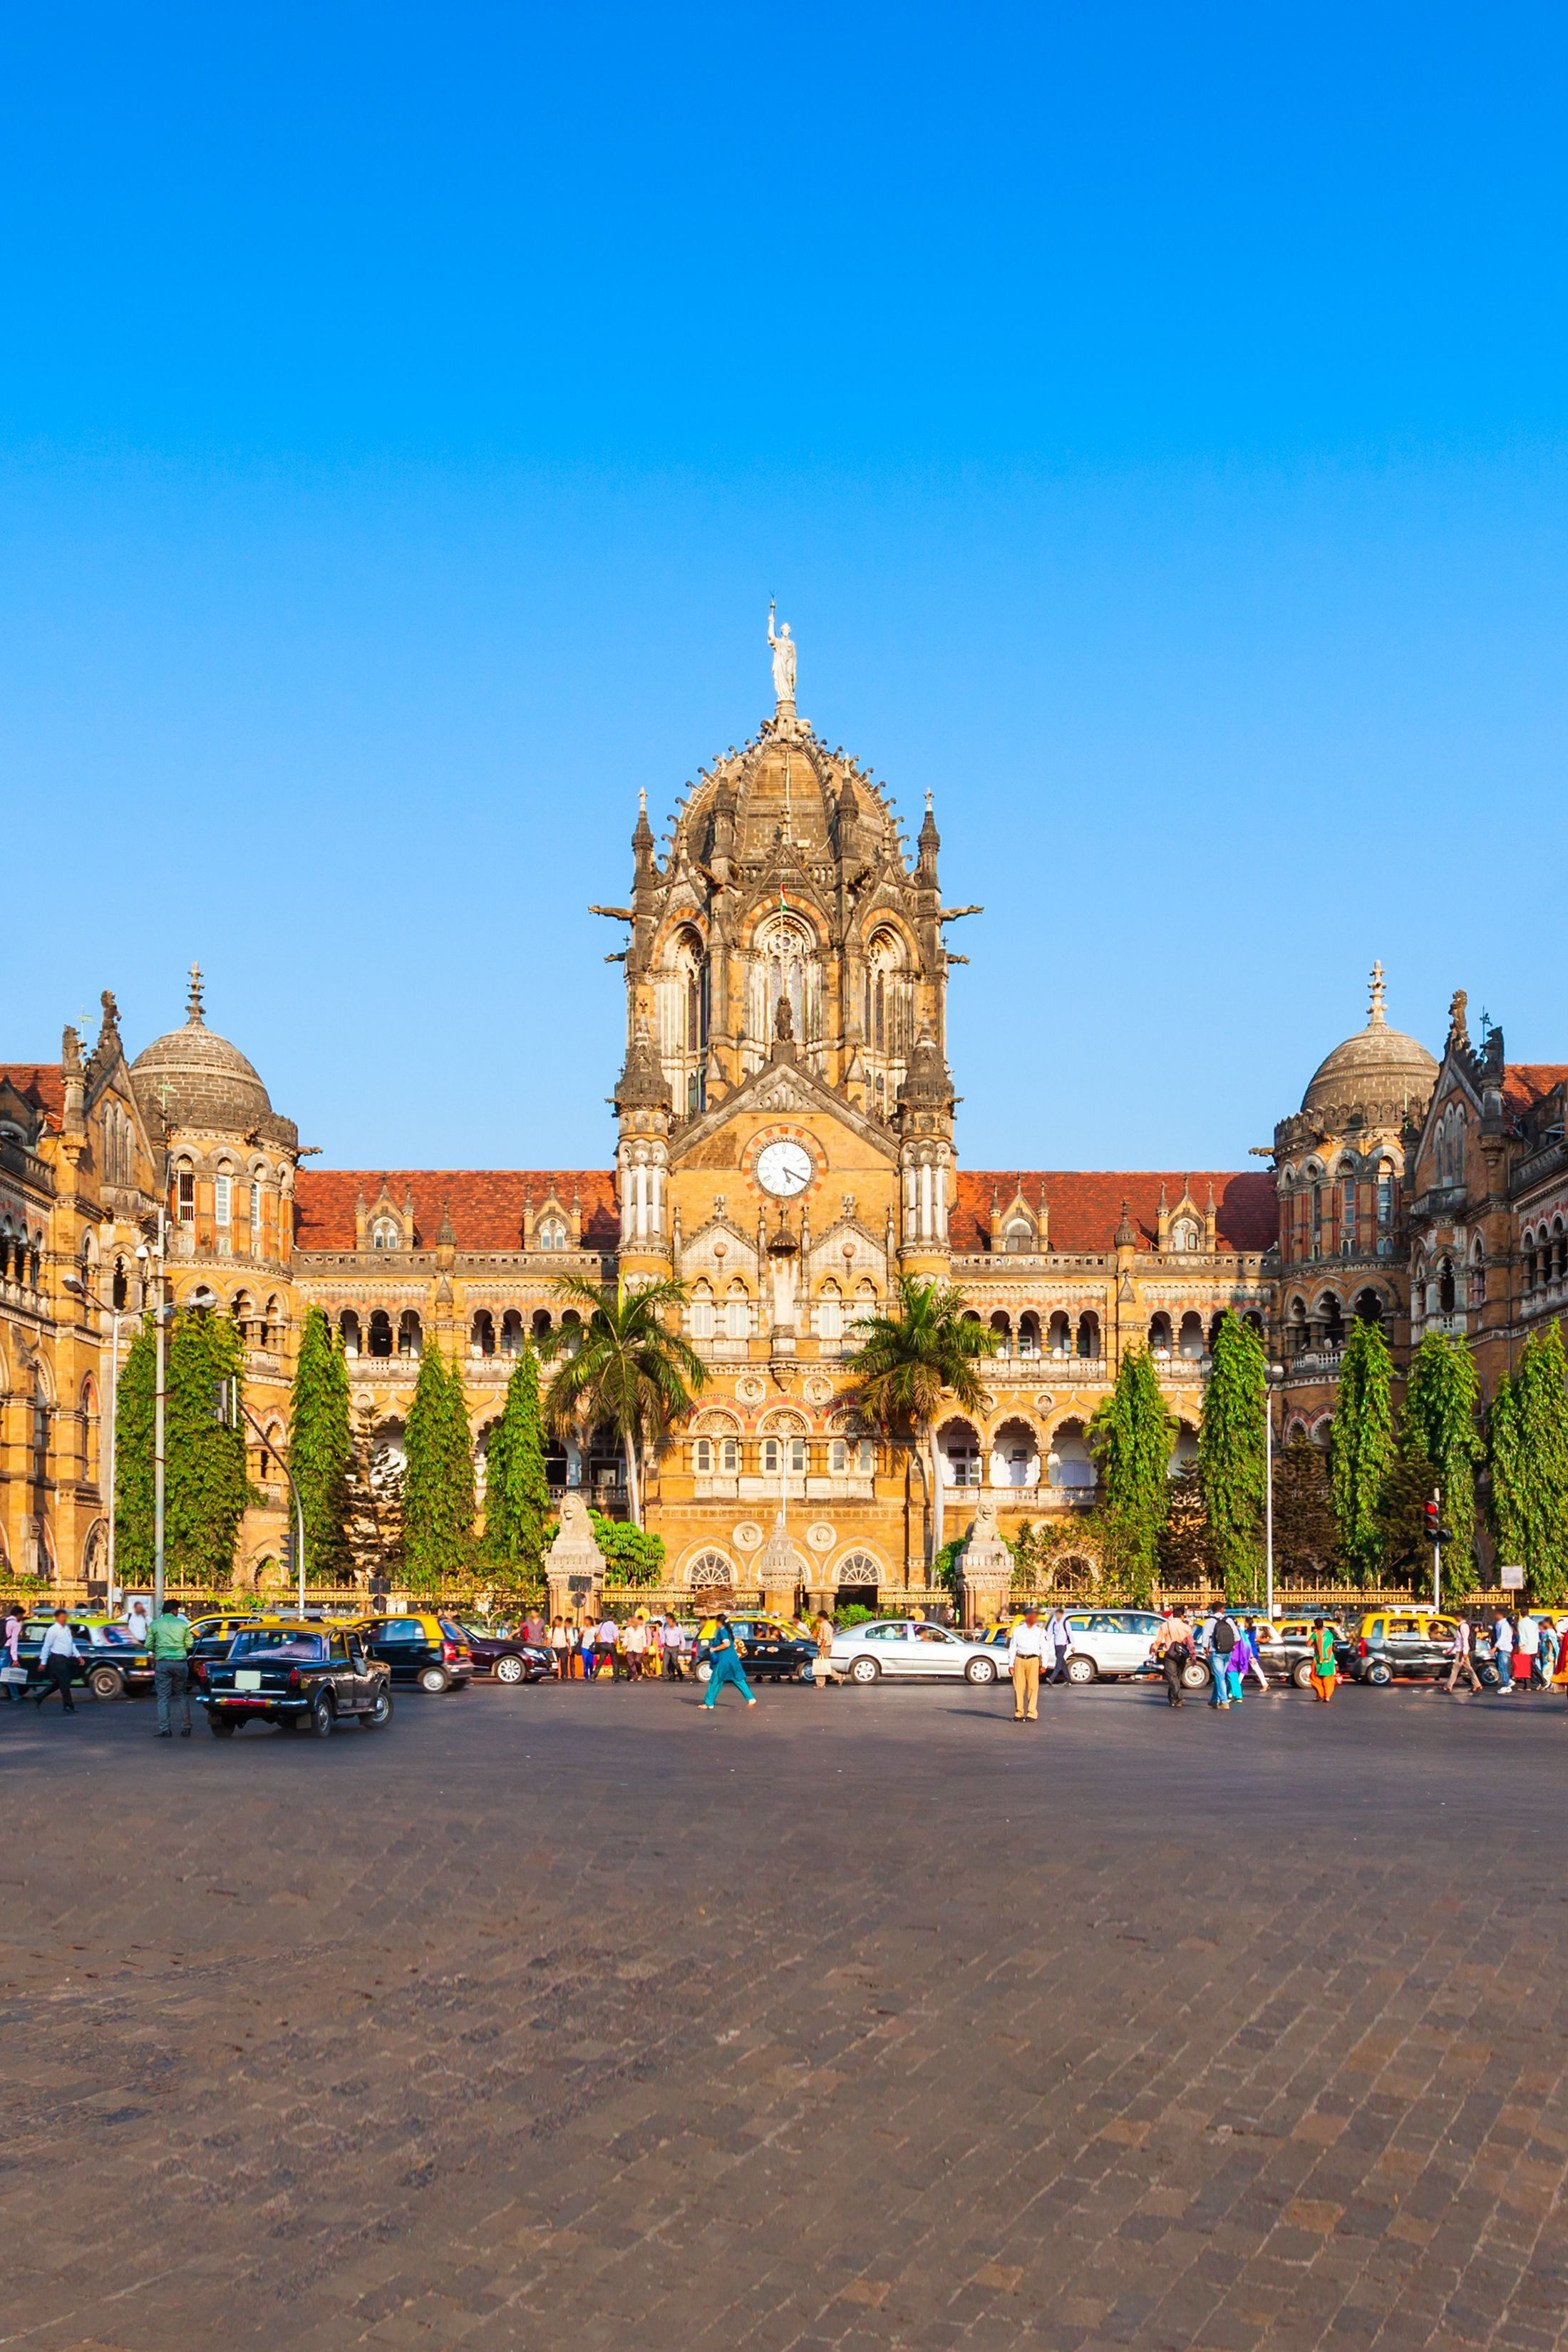 Chhatrapati Shivaji Maharaj Terminus or Victoria Terminus is a historic terminal train station and UNESCO World Heritage Site in Mumbai city, India